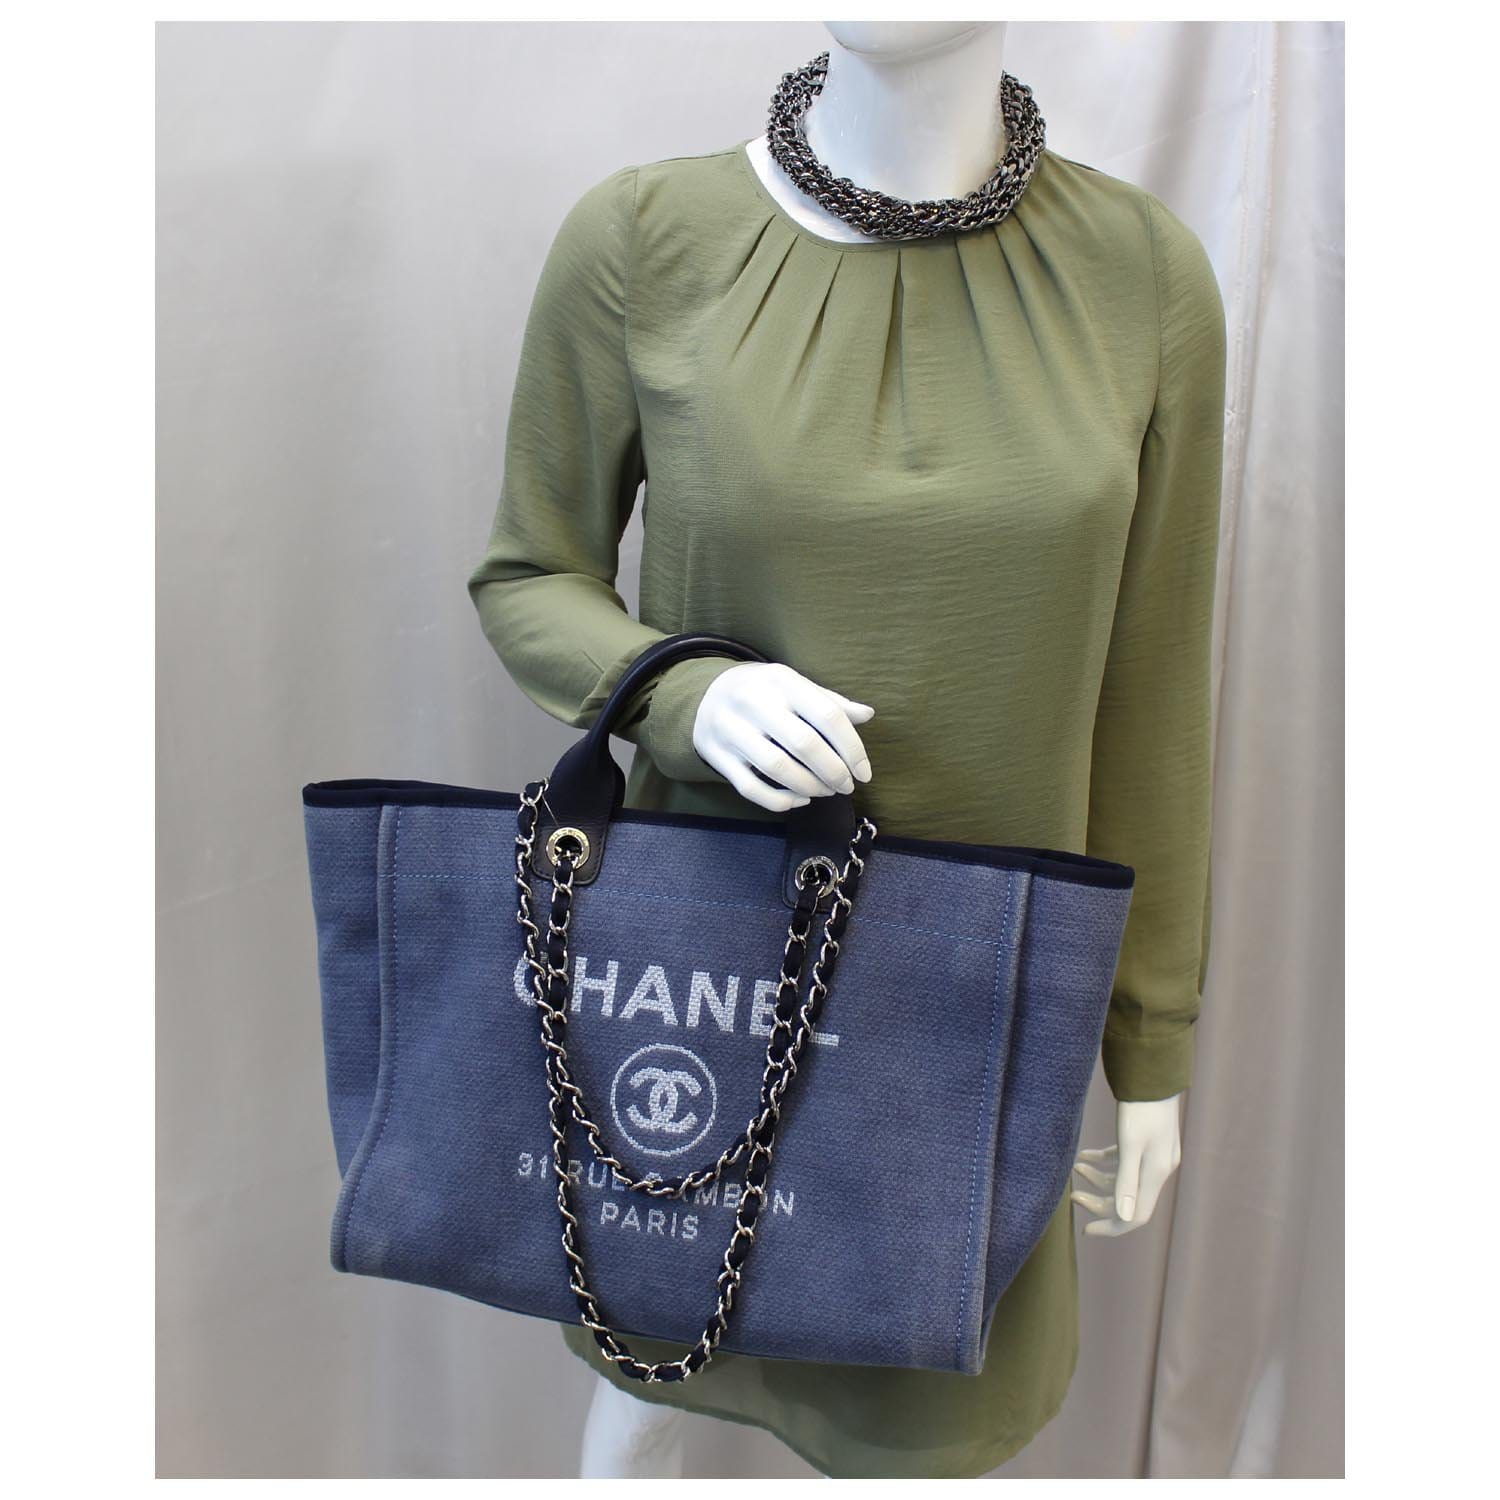 chanel shopping bag purse